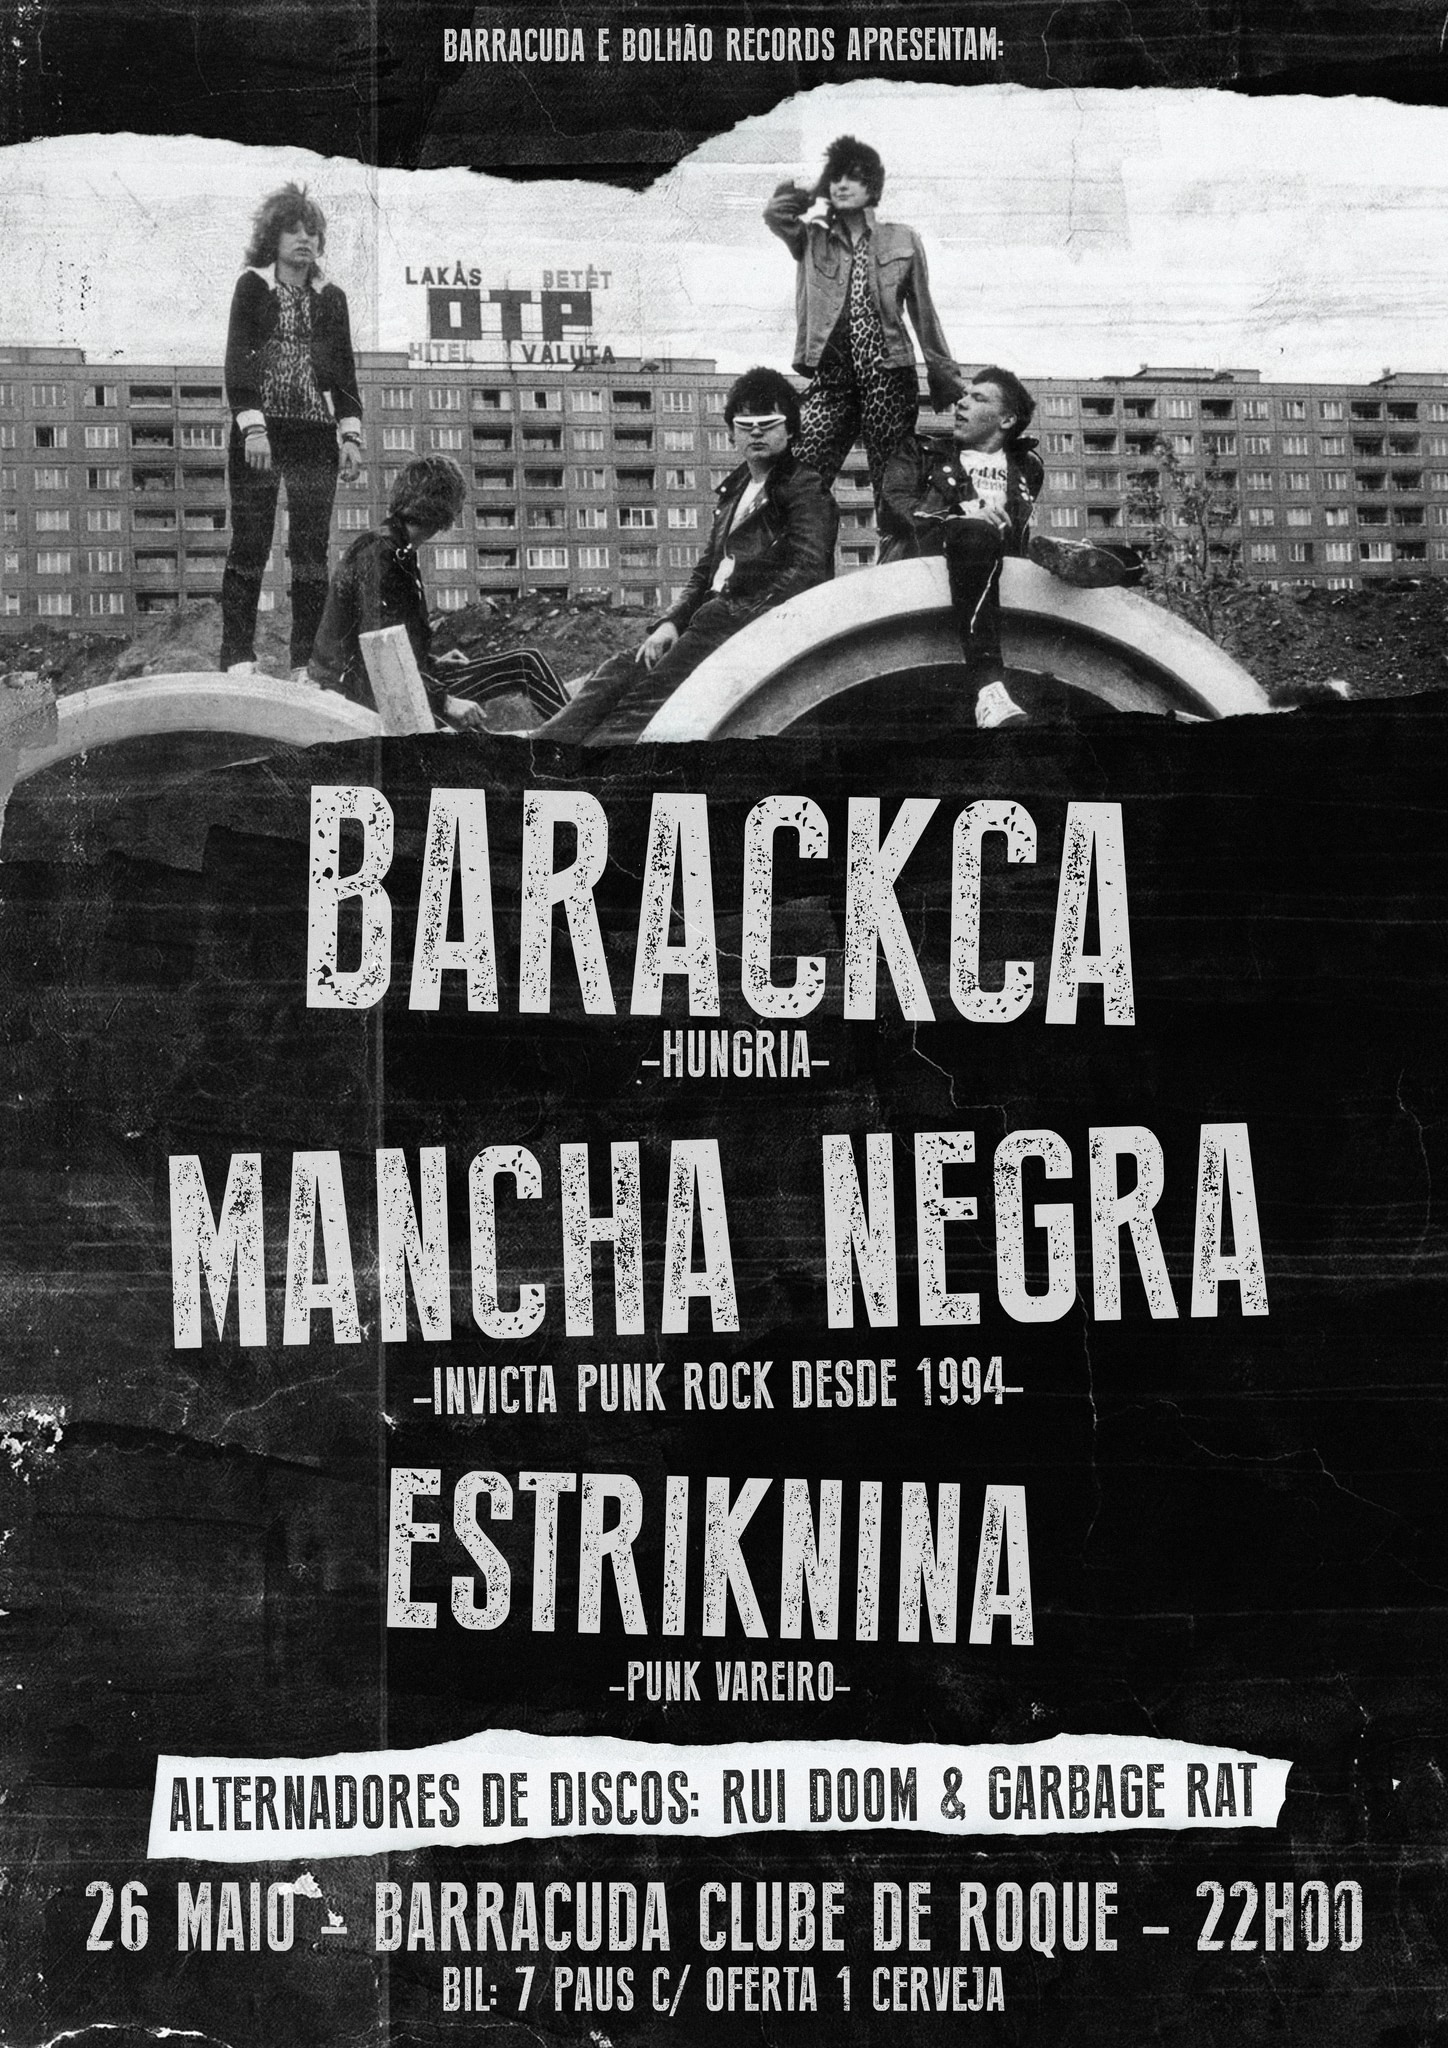 PUNK: Barackca (Hungria) + Mancha Negra + Estriknina - BARRACUDA, PORTO